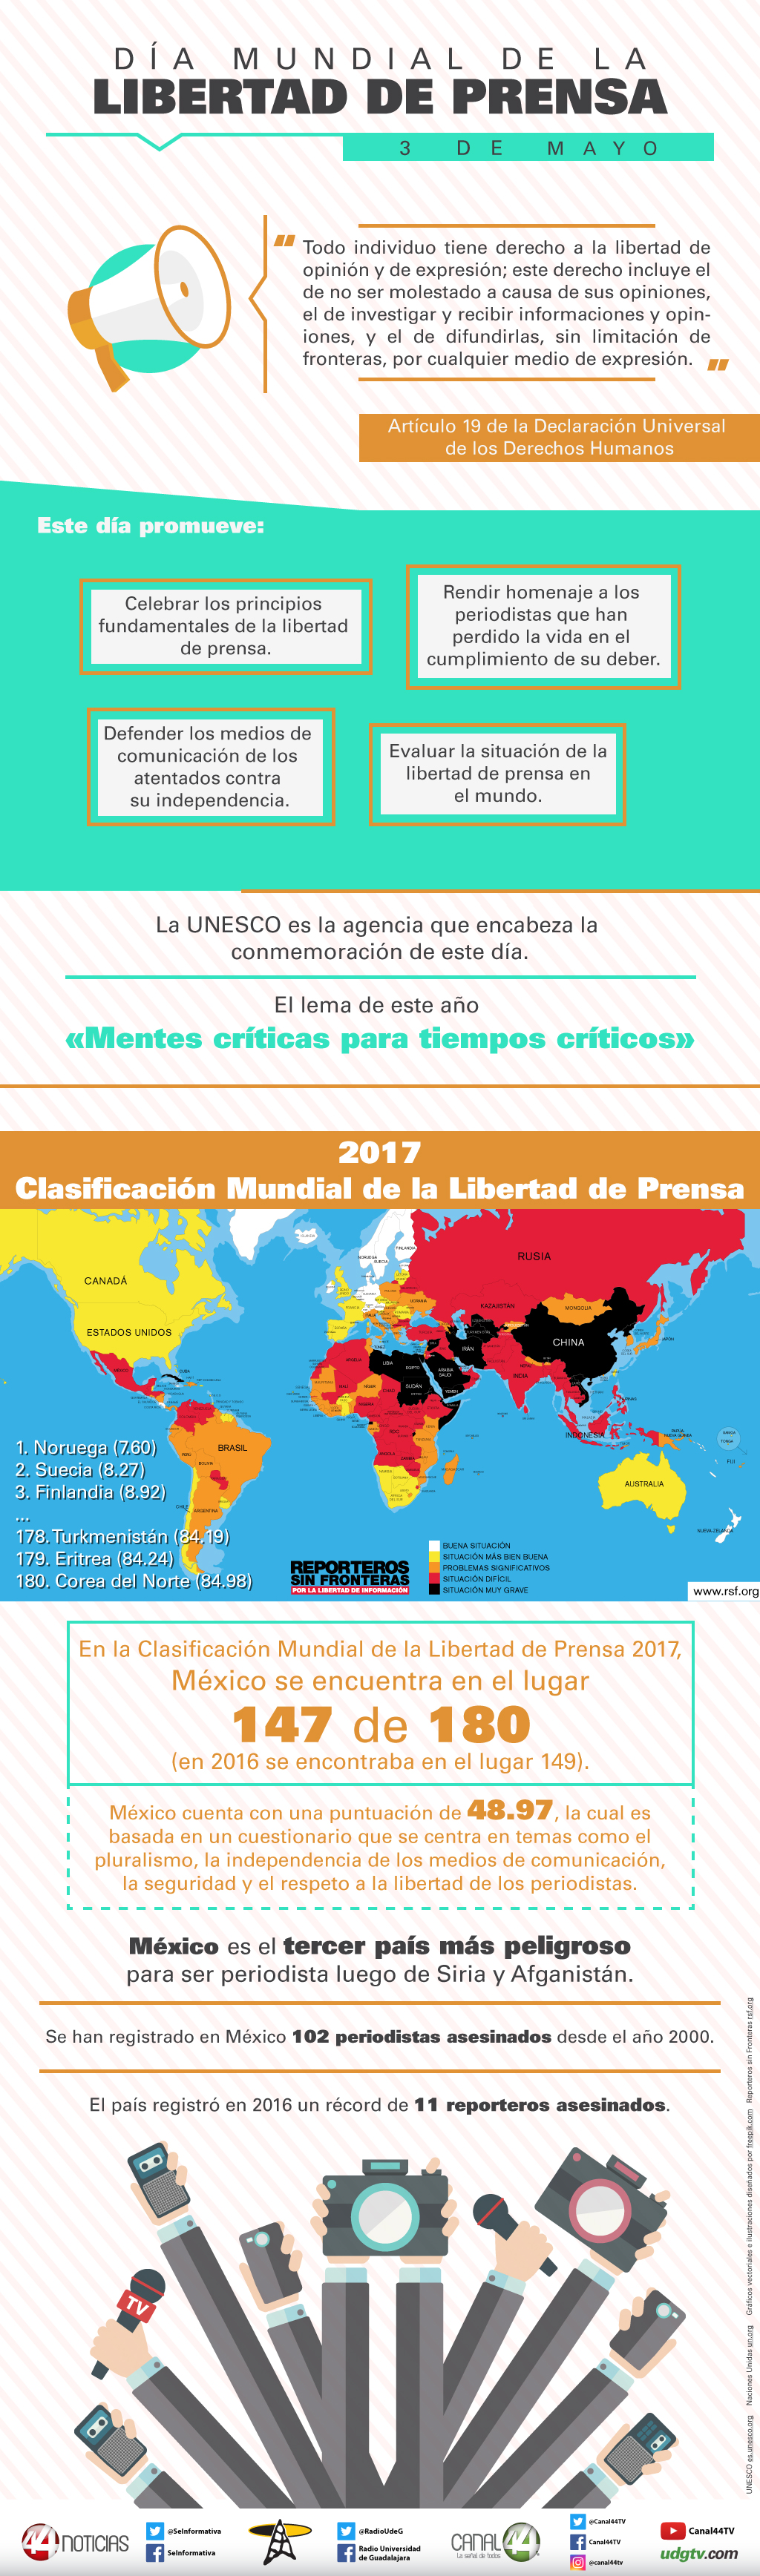 libertad de prensa 2017